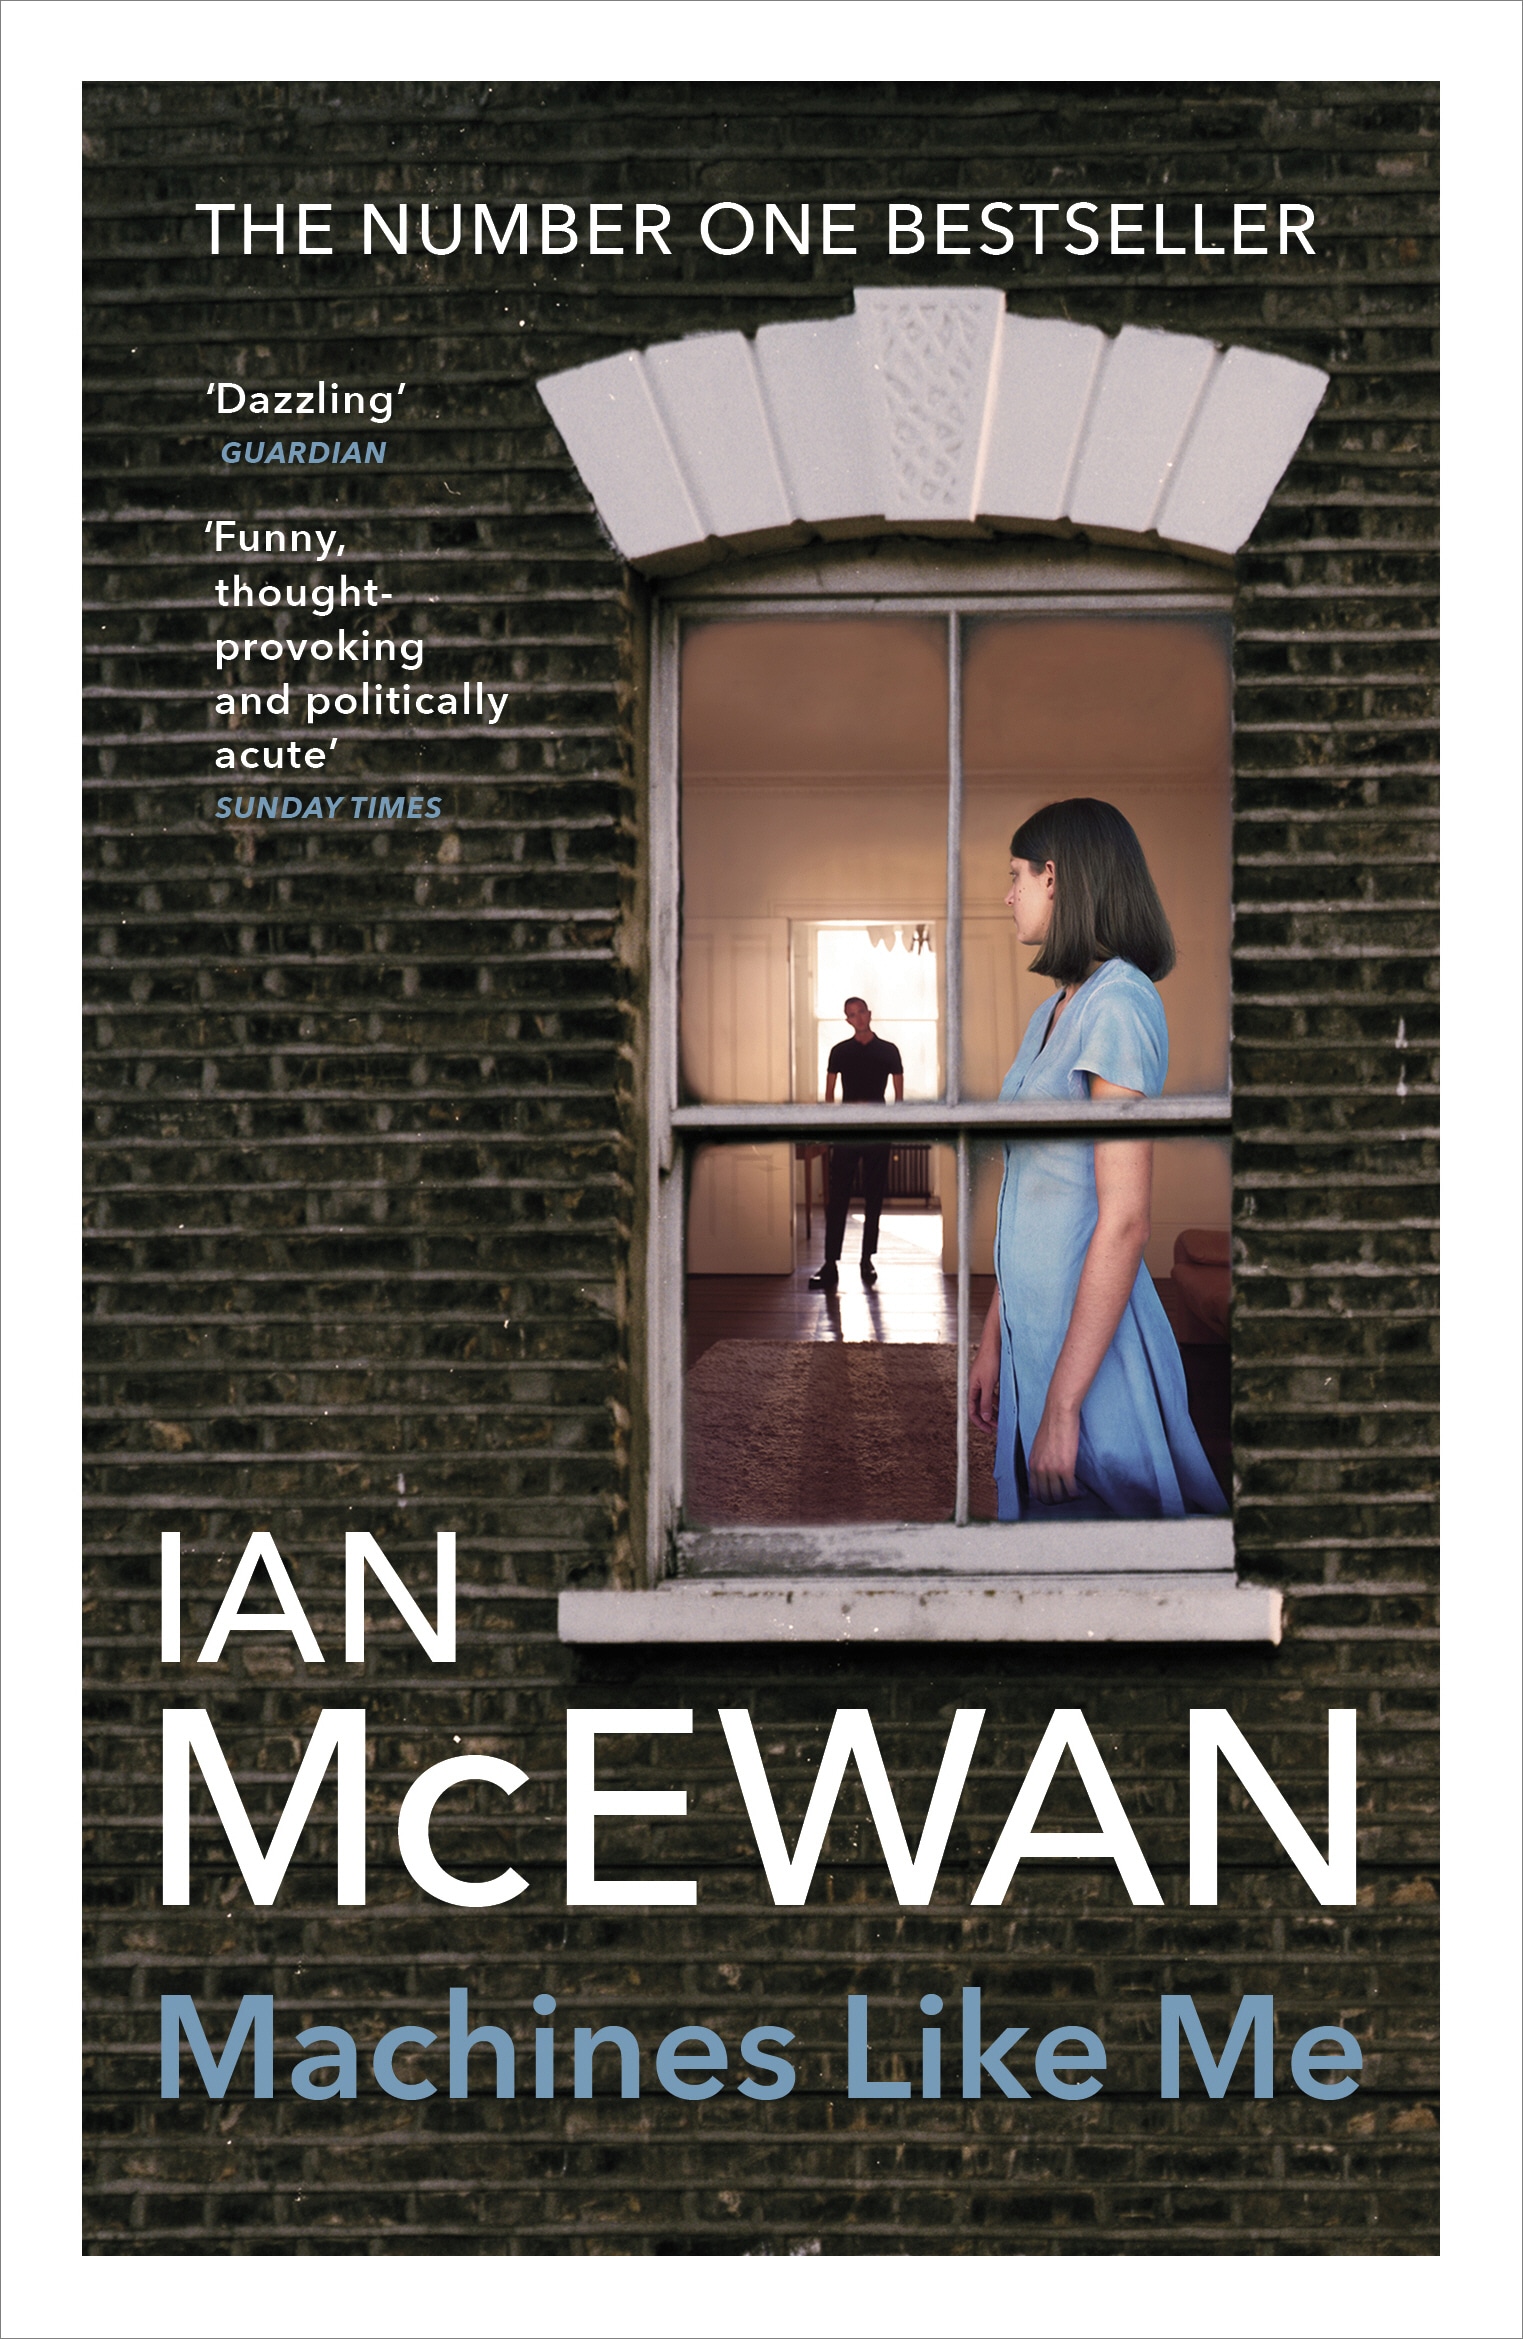 Book “Machines Like Me” by Ian McEwan — March 5, 2020